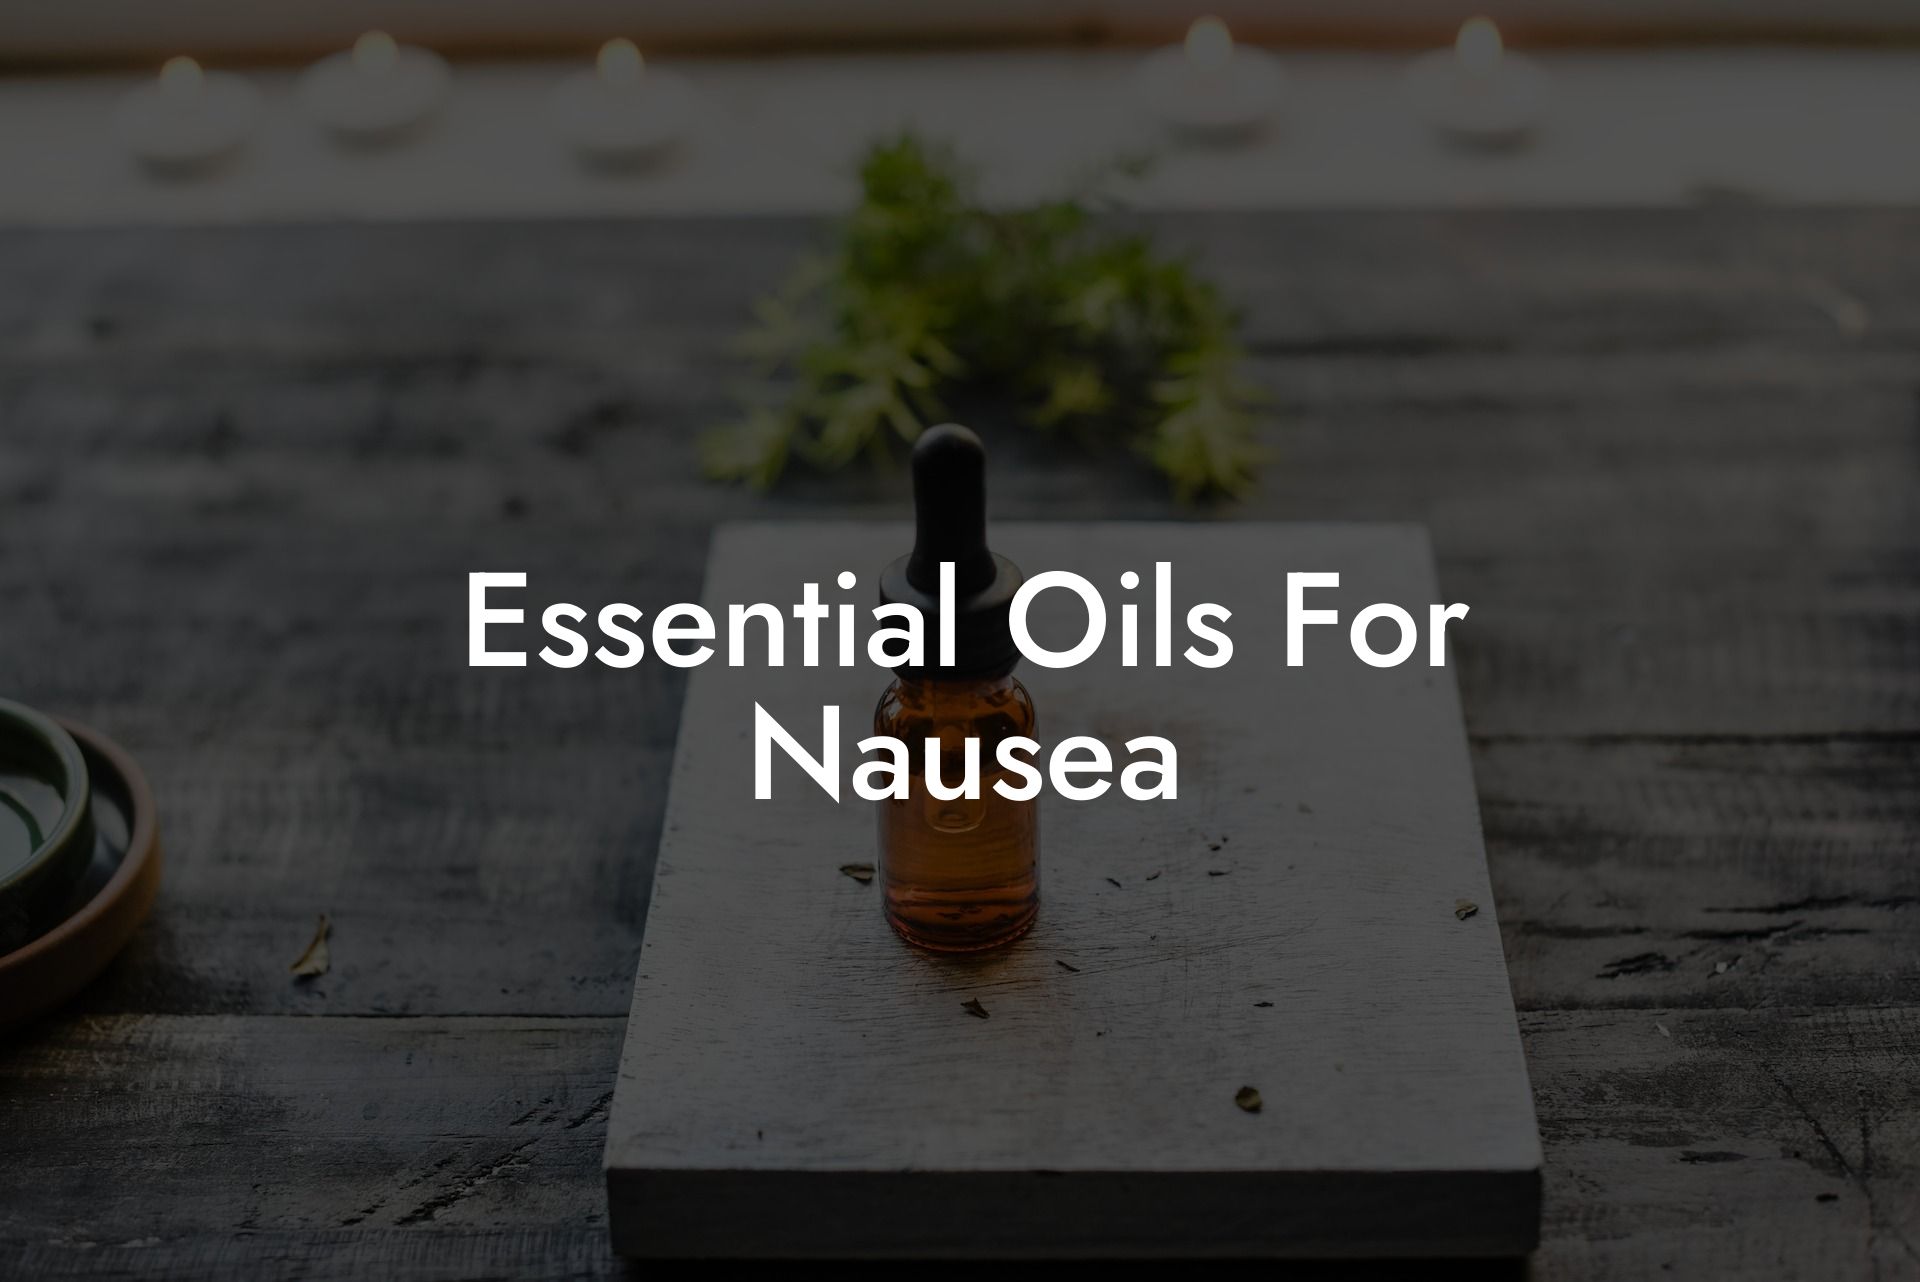 Essential Oils For Nausea